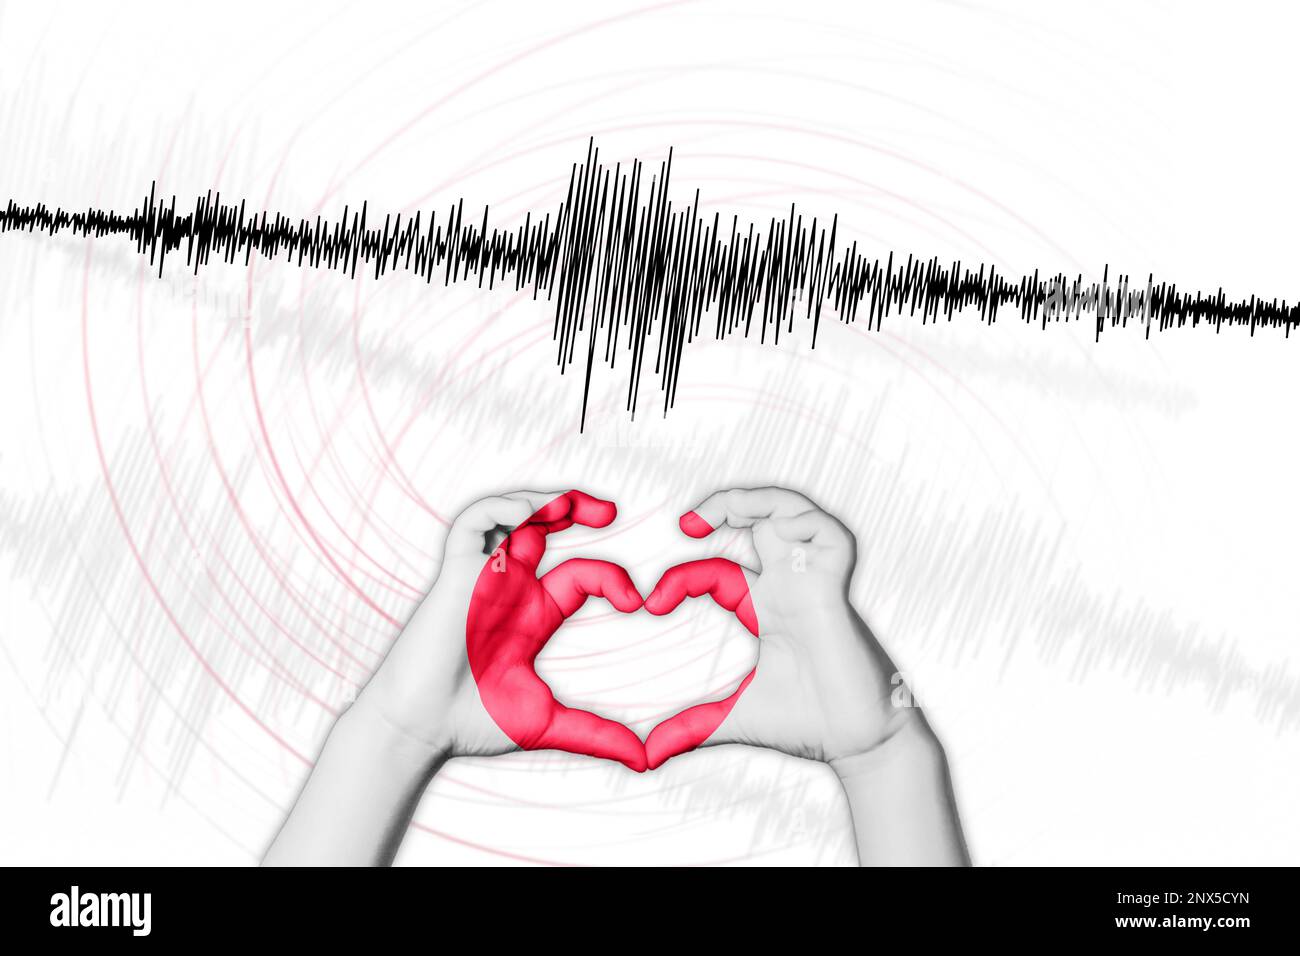 Erdbeben Japan Symbol der Heart Richter Scale Stockfoto